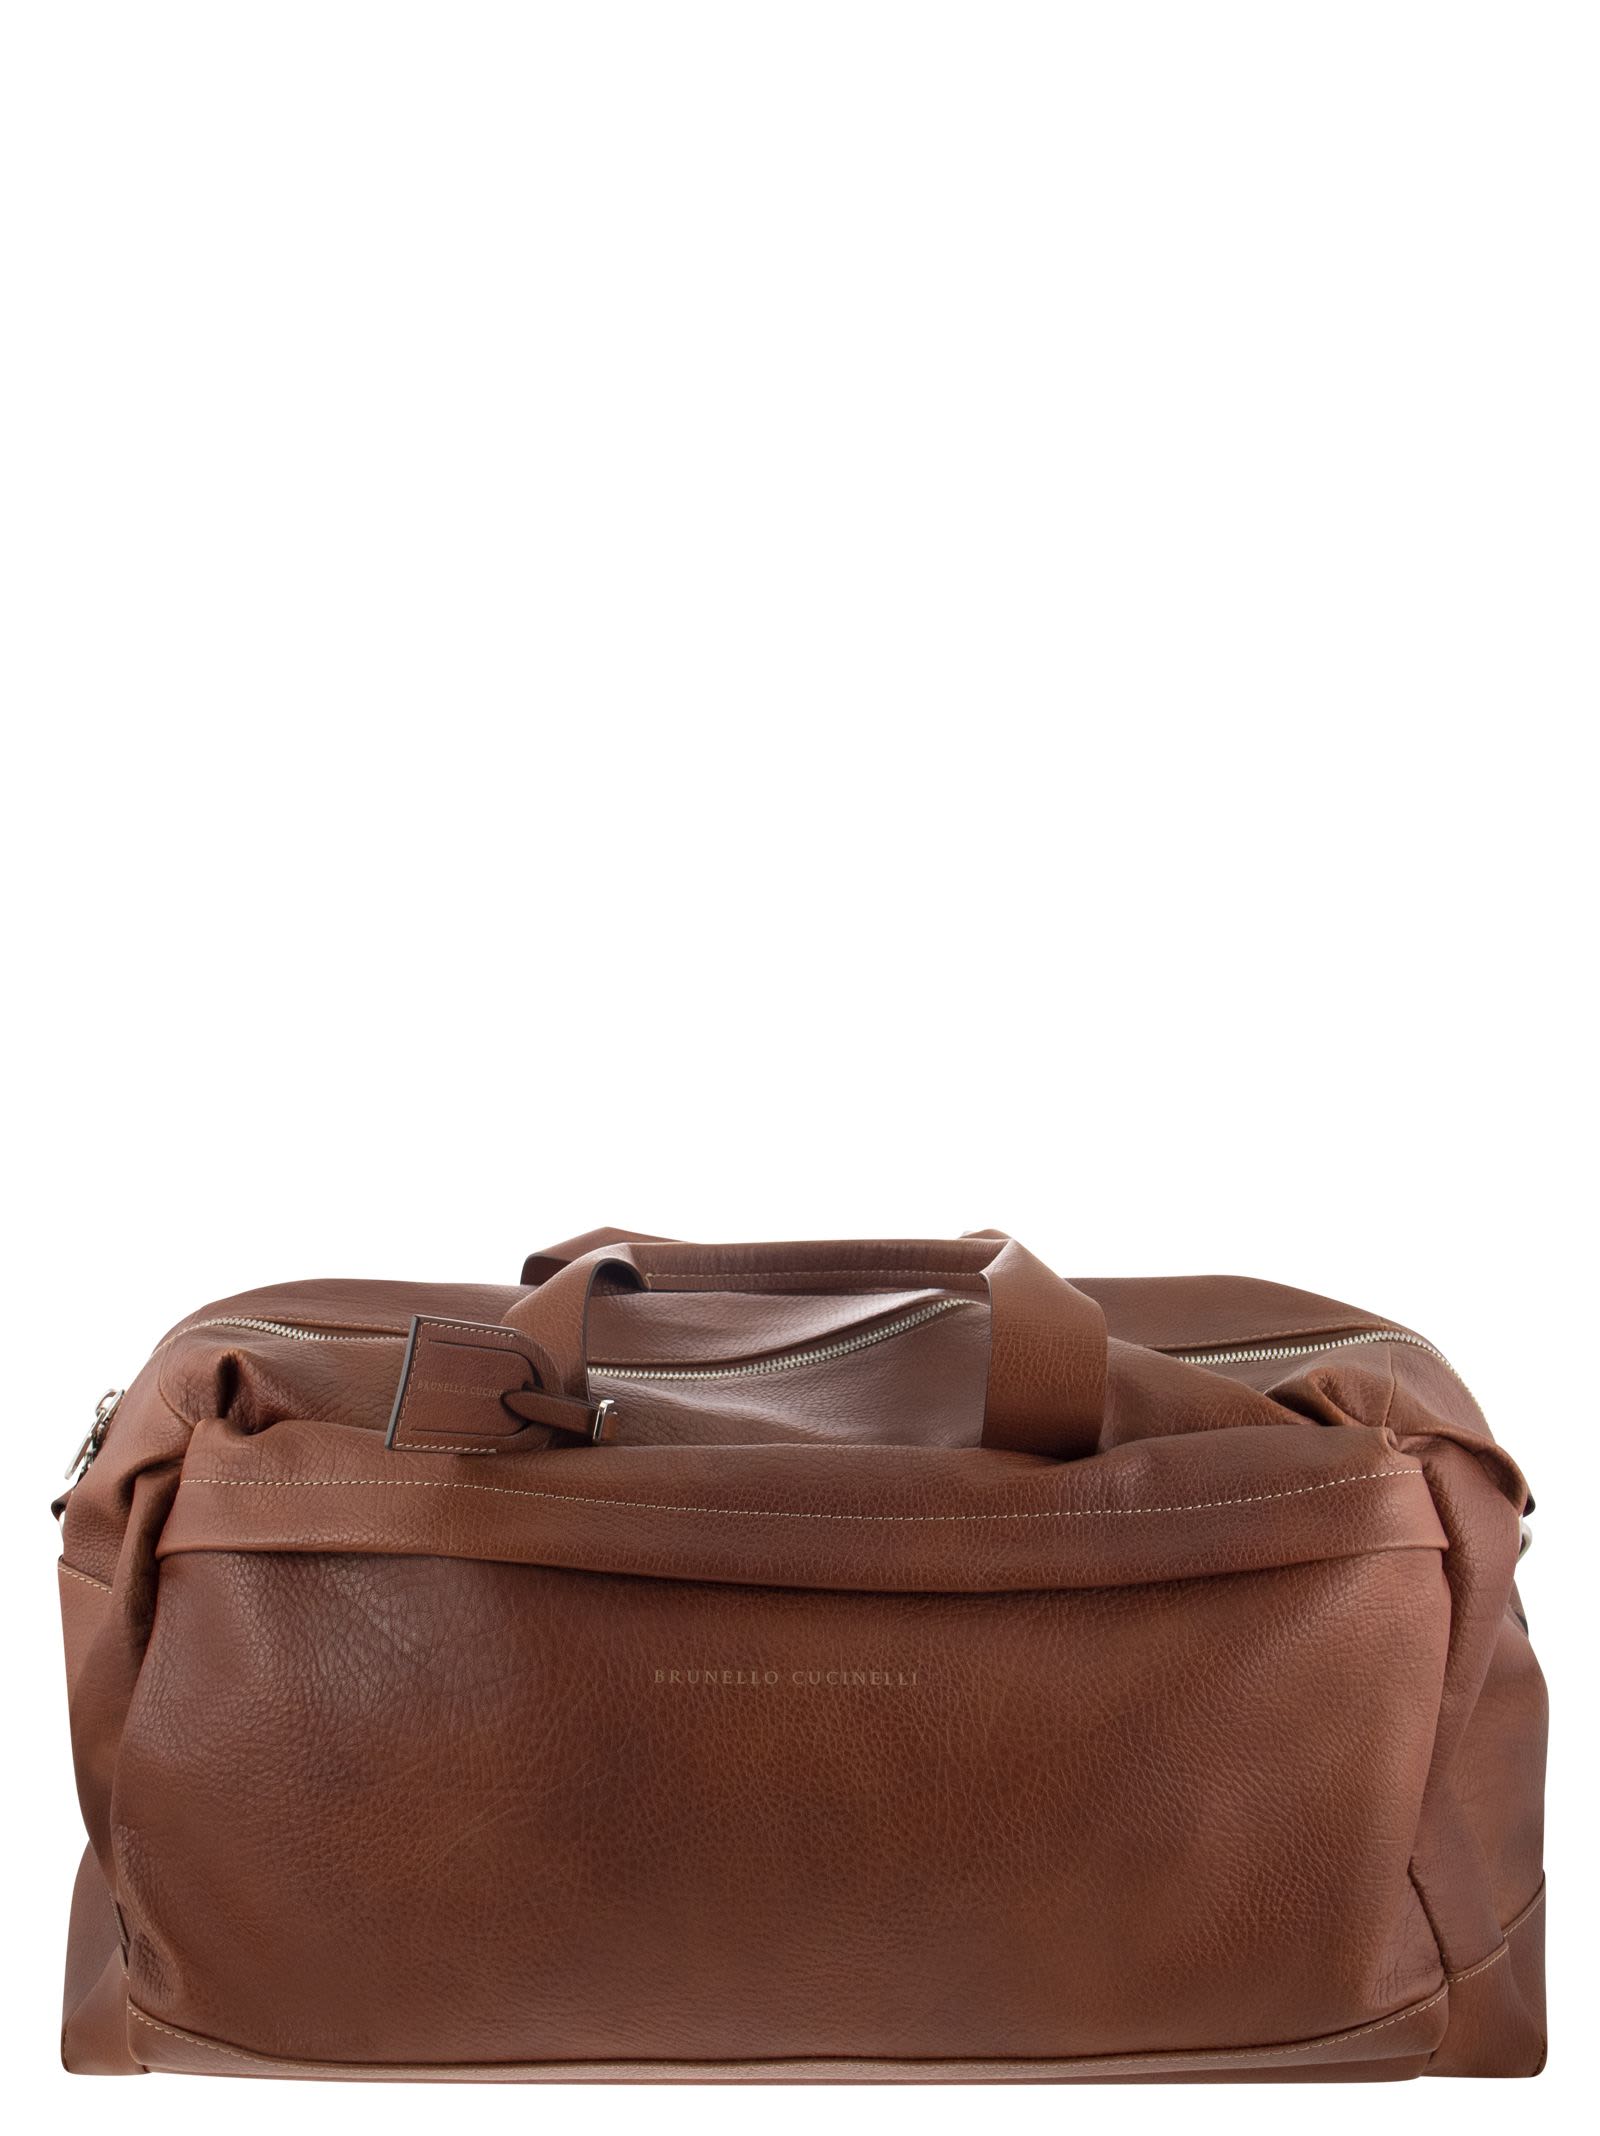 Brunello Cucinelli Travel Bag In Grained Calfskin